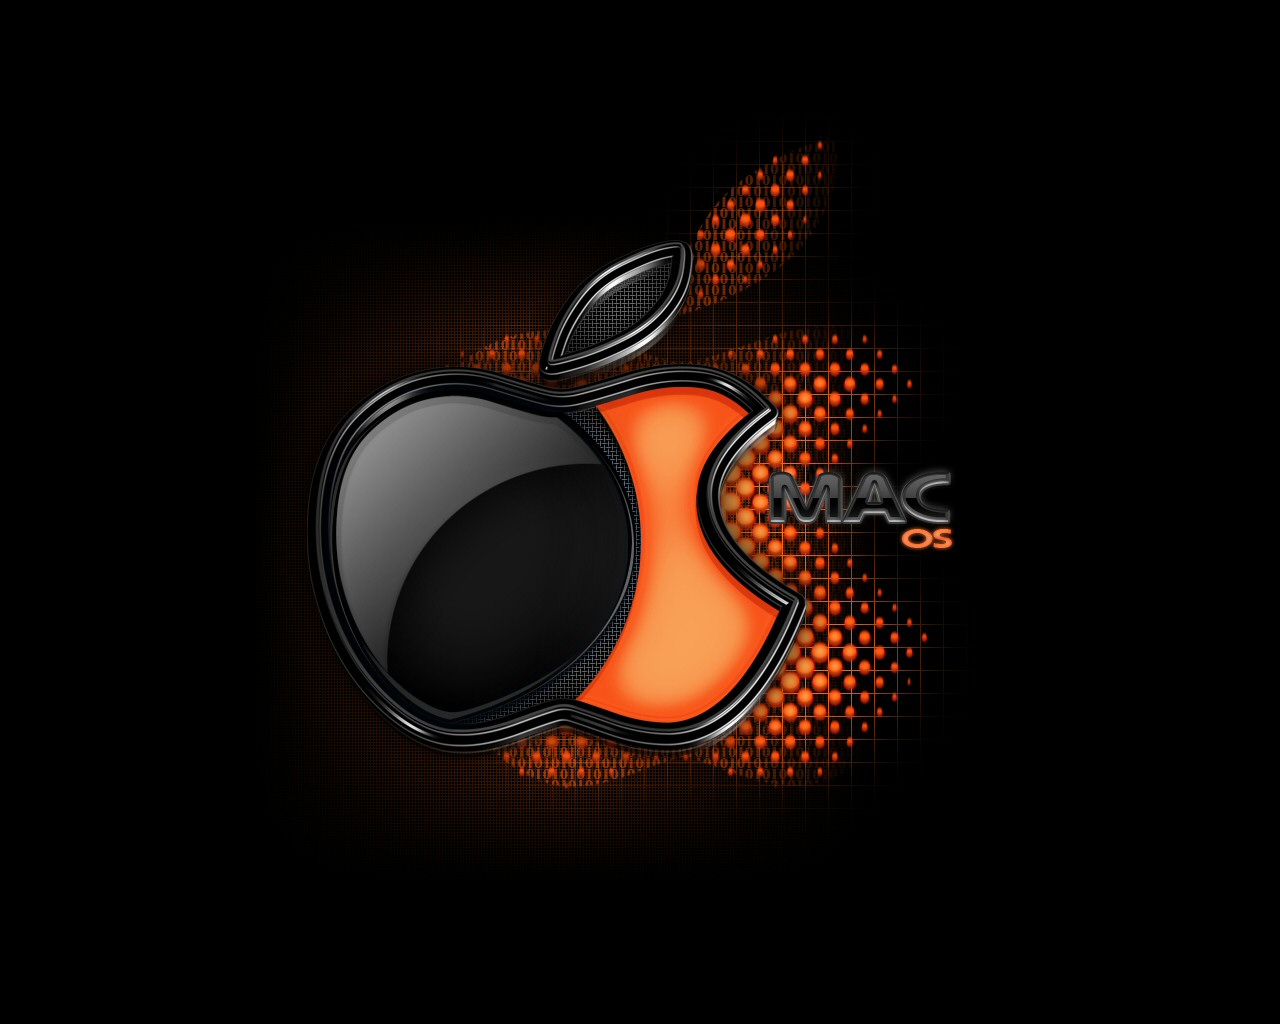 carta da parati 3d per mac,arancia,occhiali,font,illustrazione,grafica